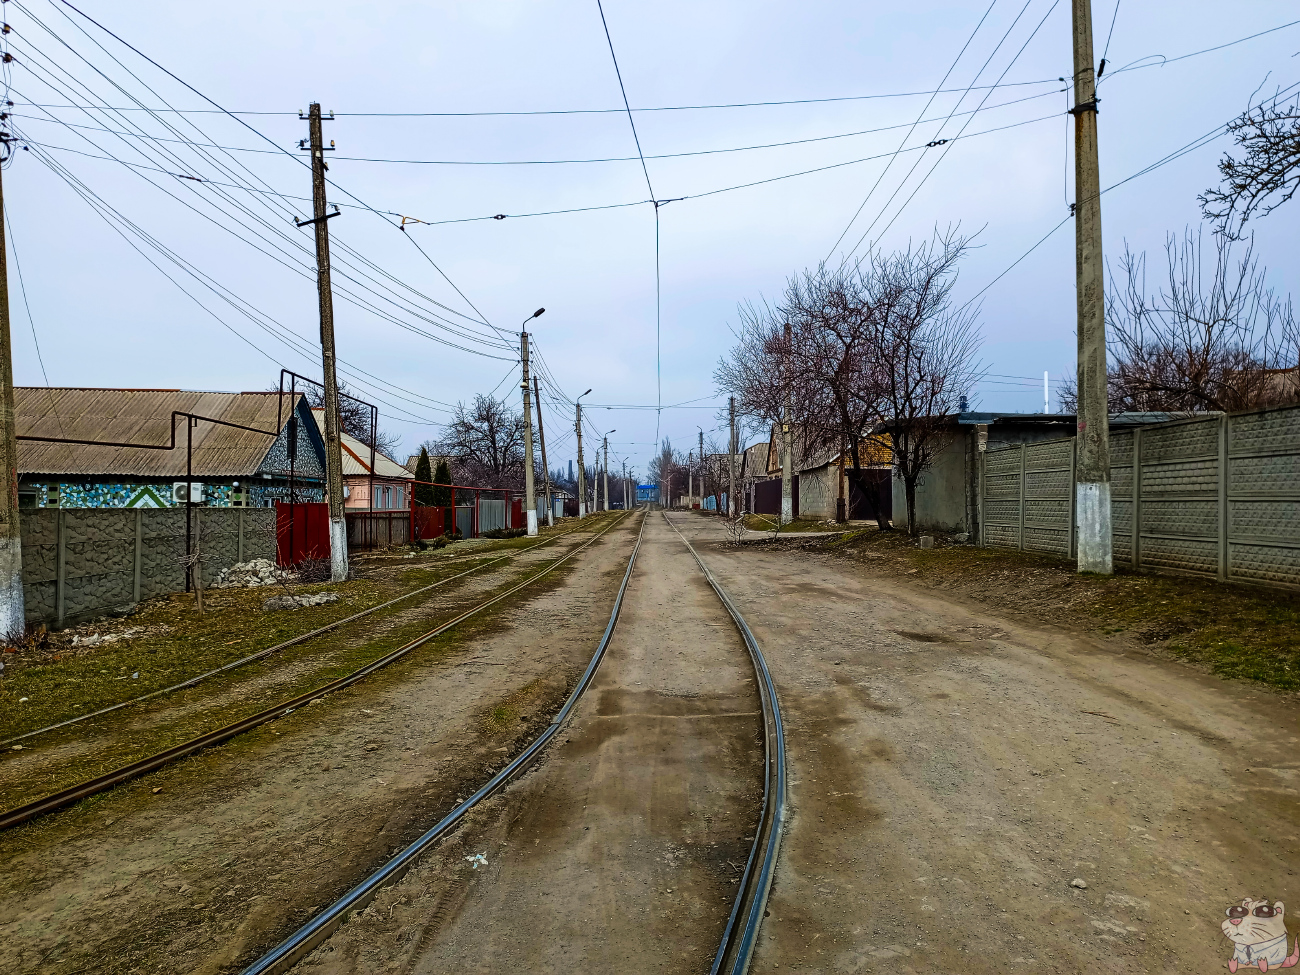 Ienakiieve — Tram lines